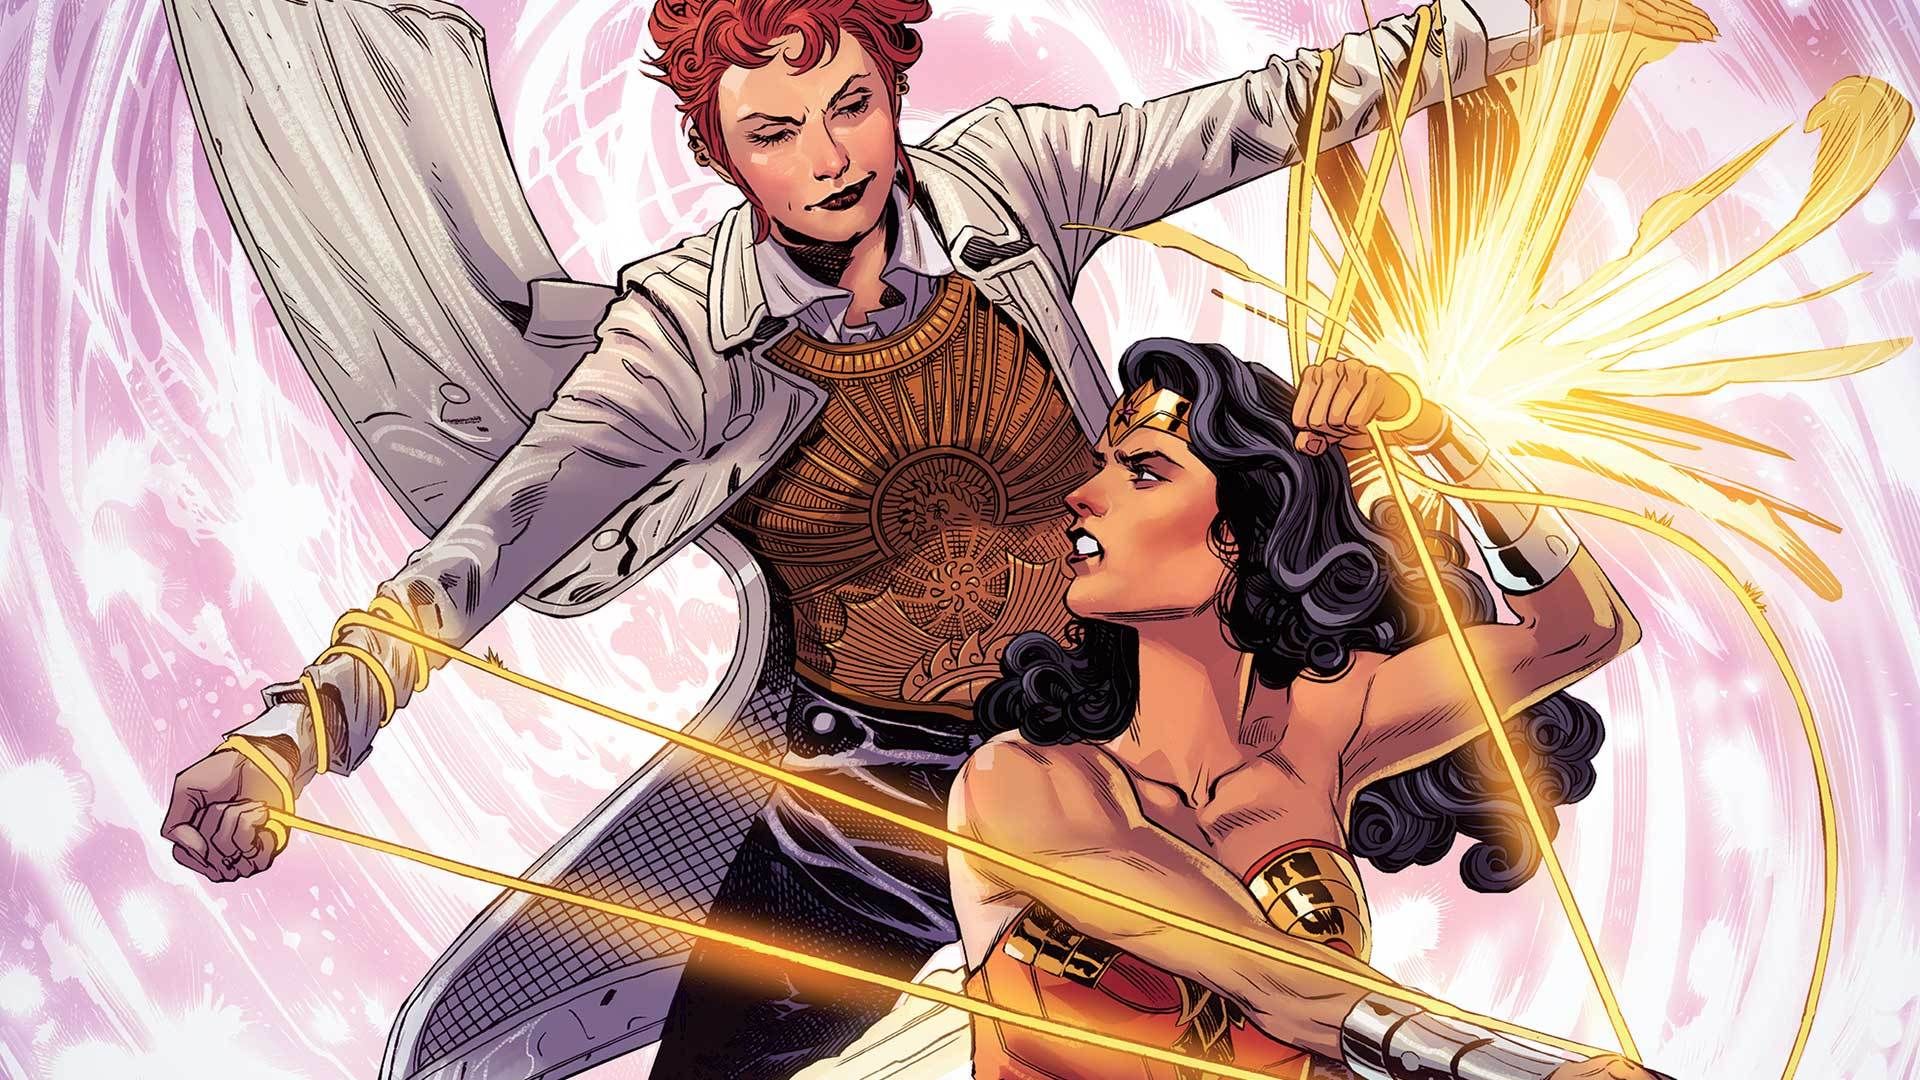 Wonder Woman fights Circe in DC Comics